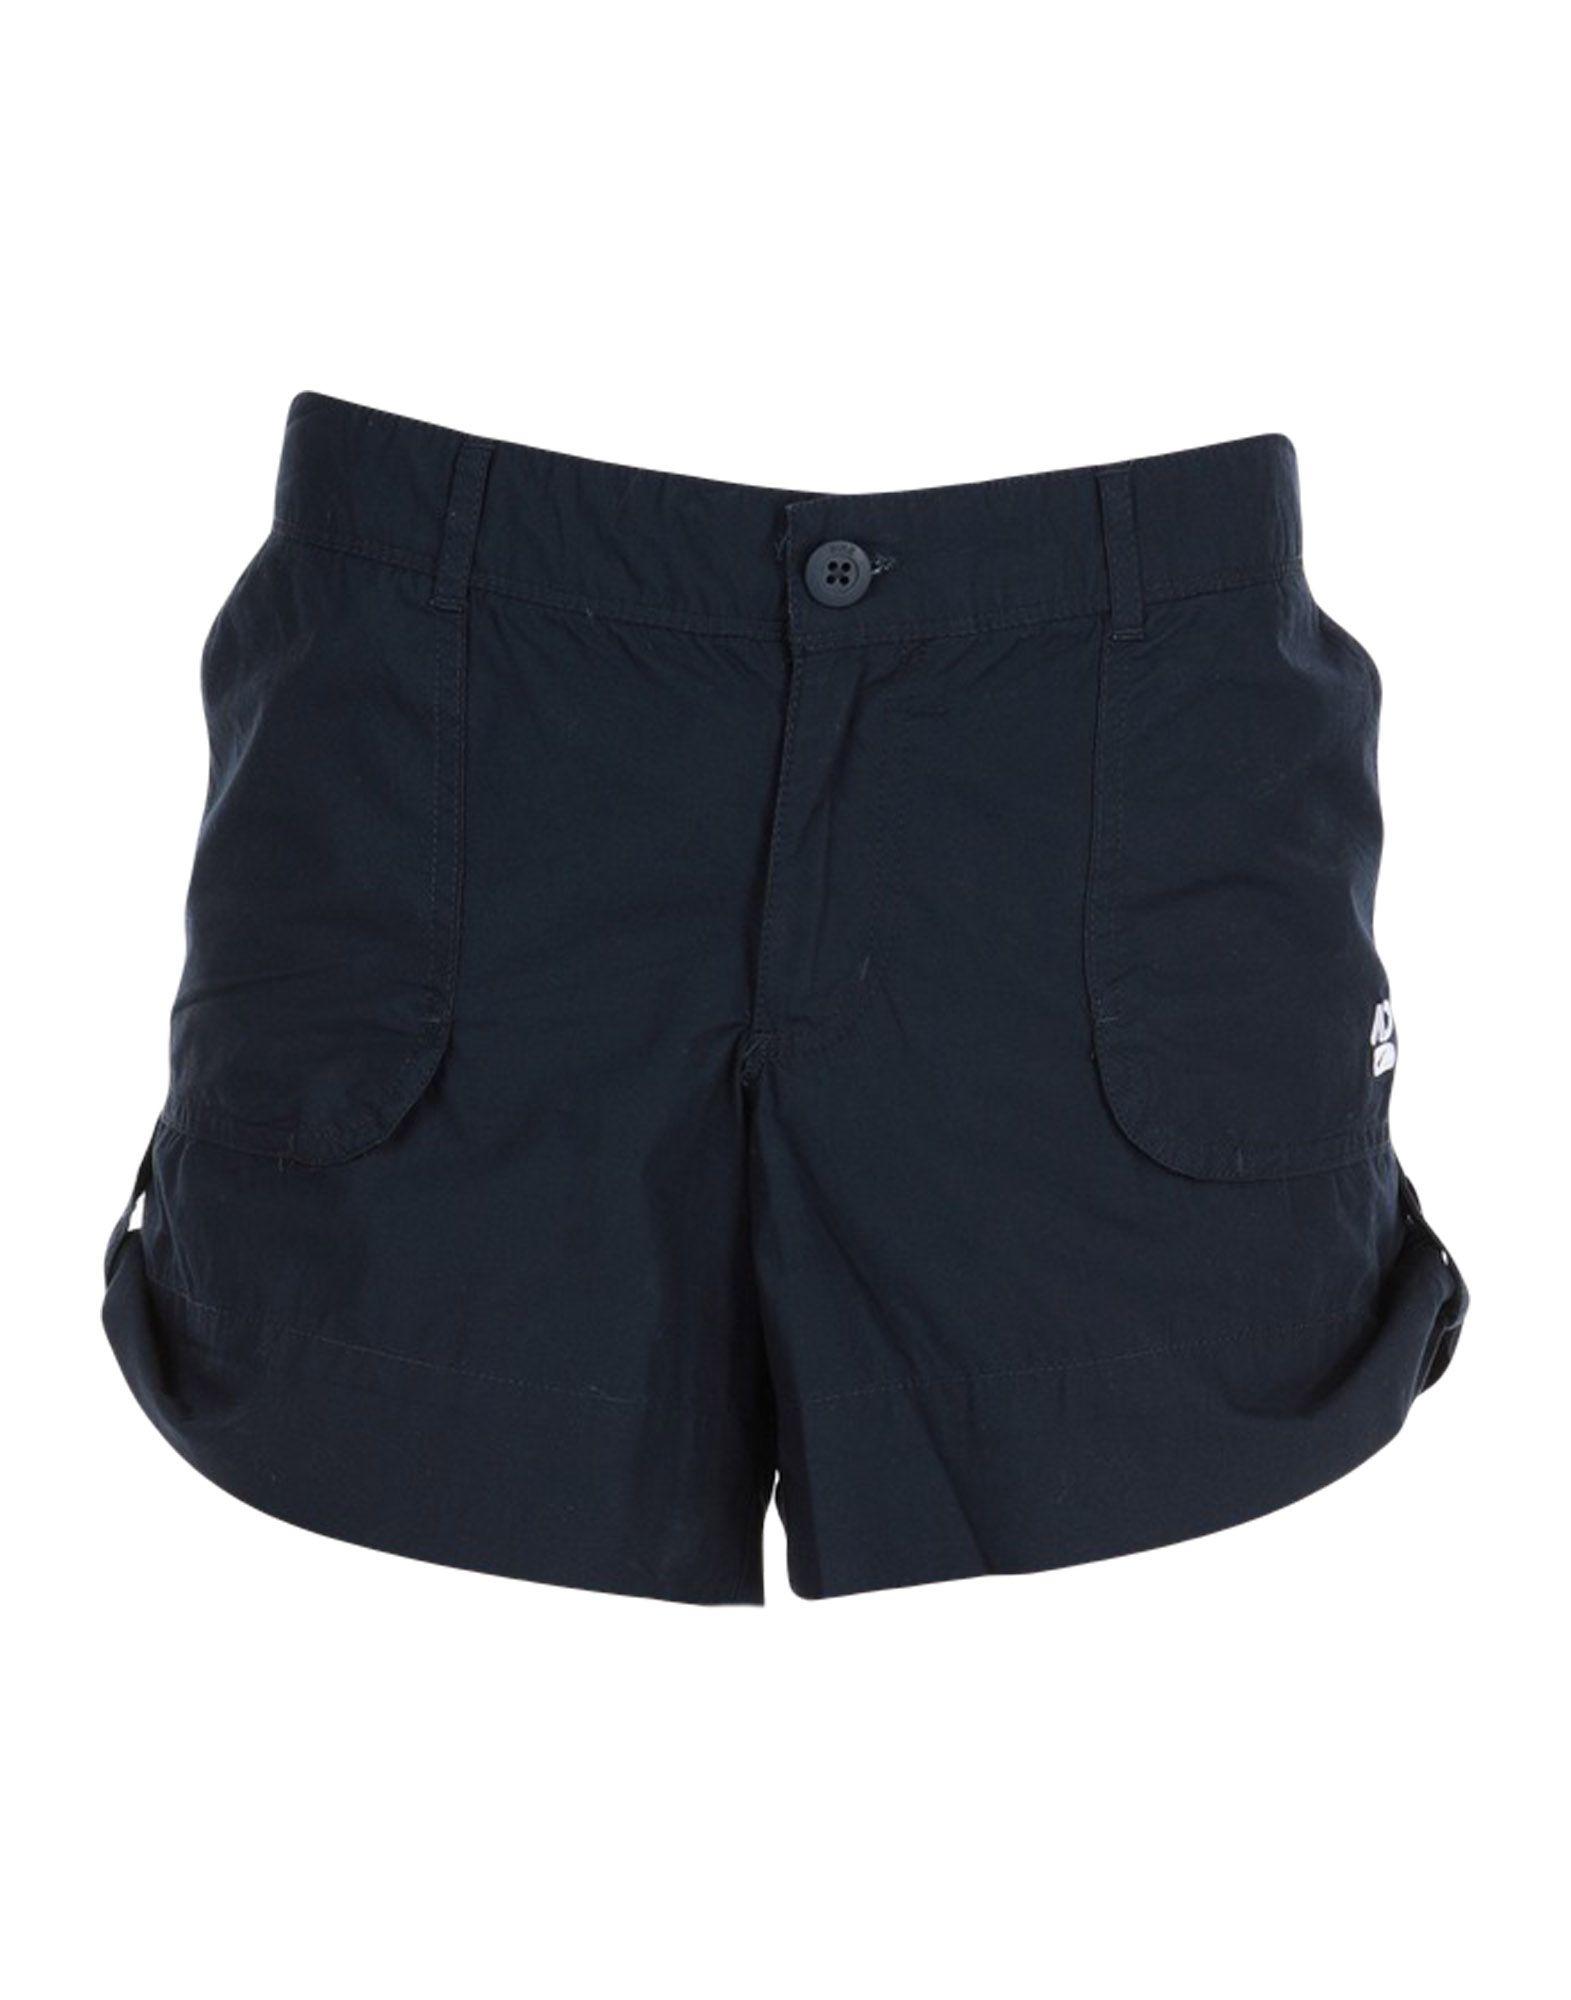 Nike Cotton Shorts in Dark Blue (Blue) - Lyst